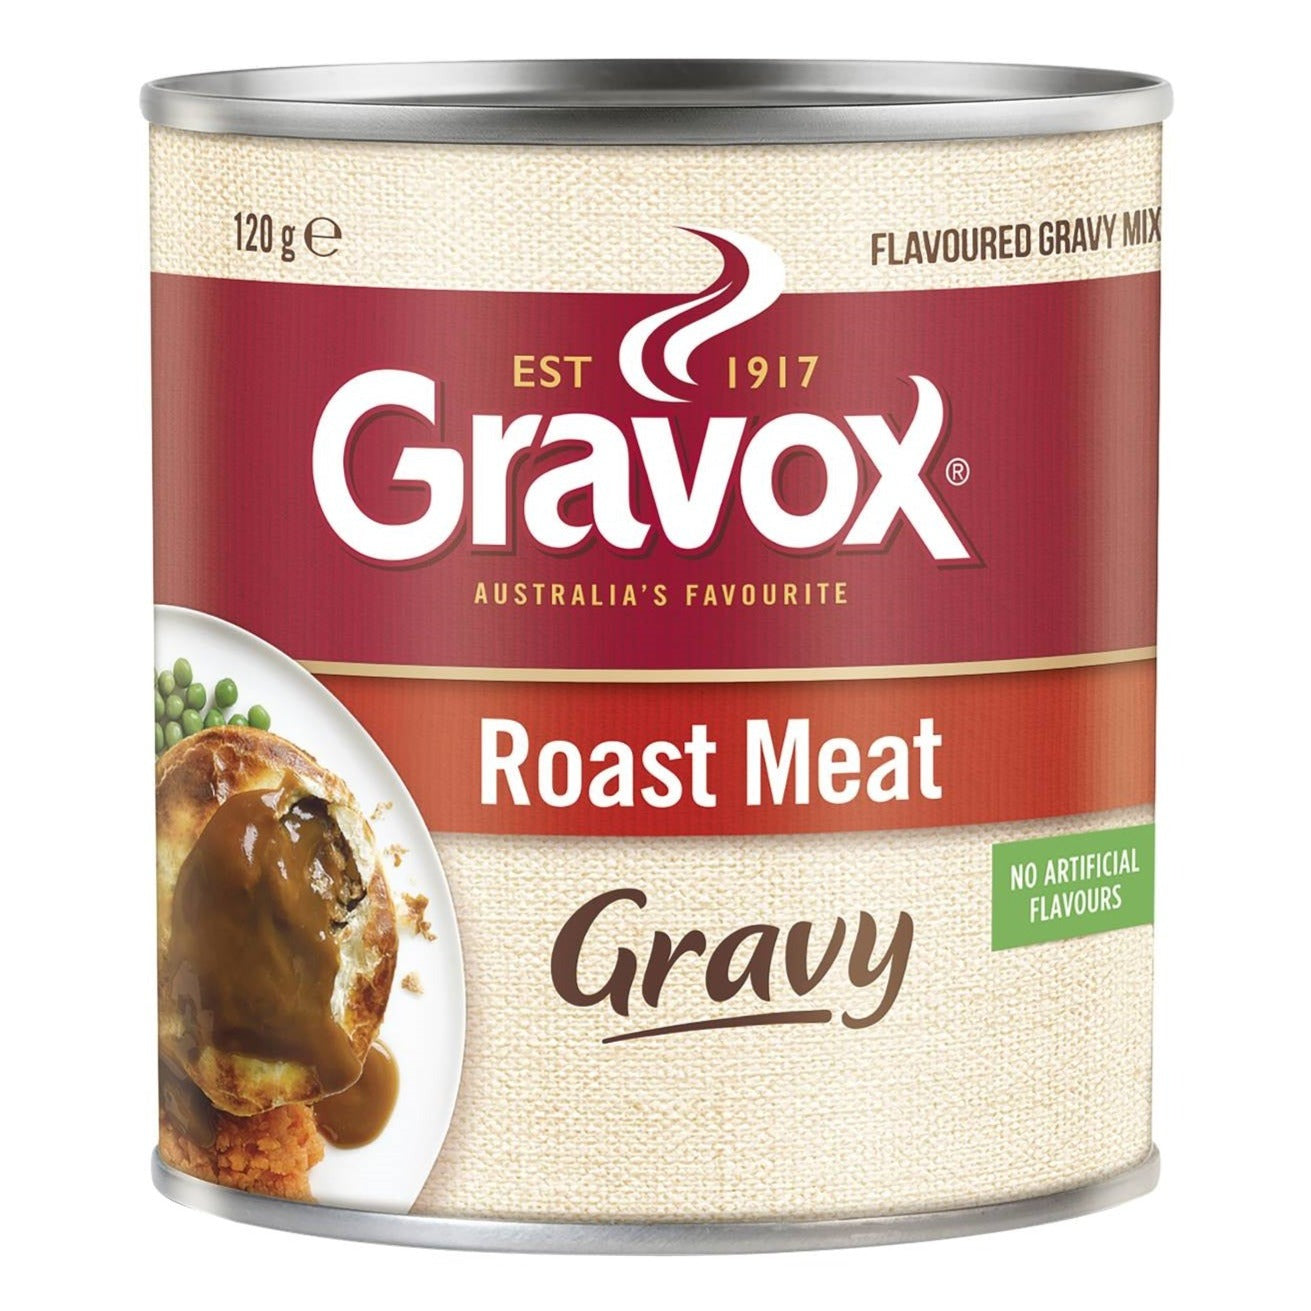 Gravox Roast Meat Gravy 120g